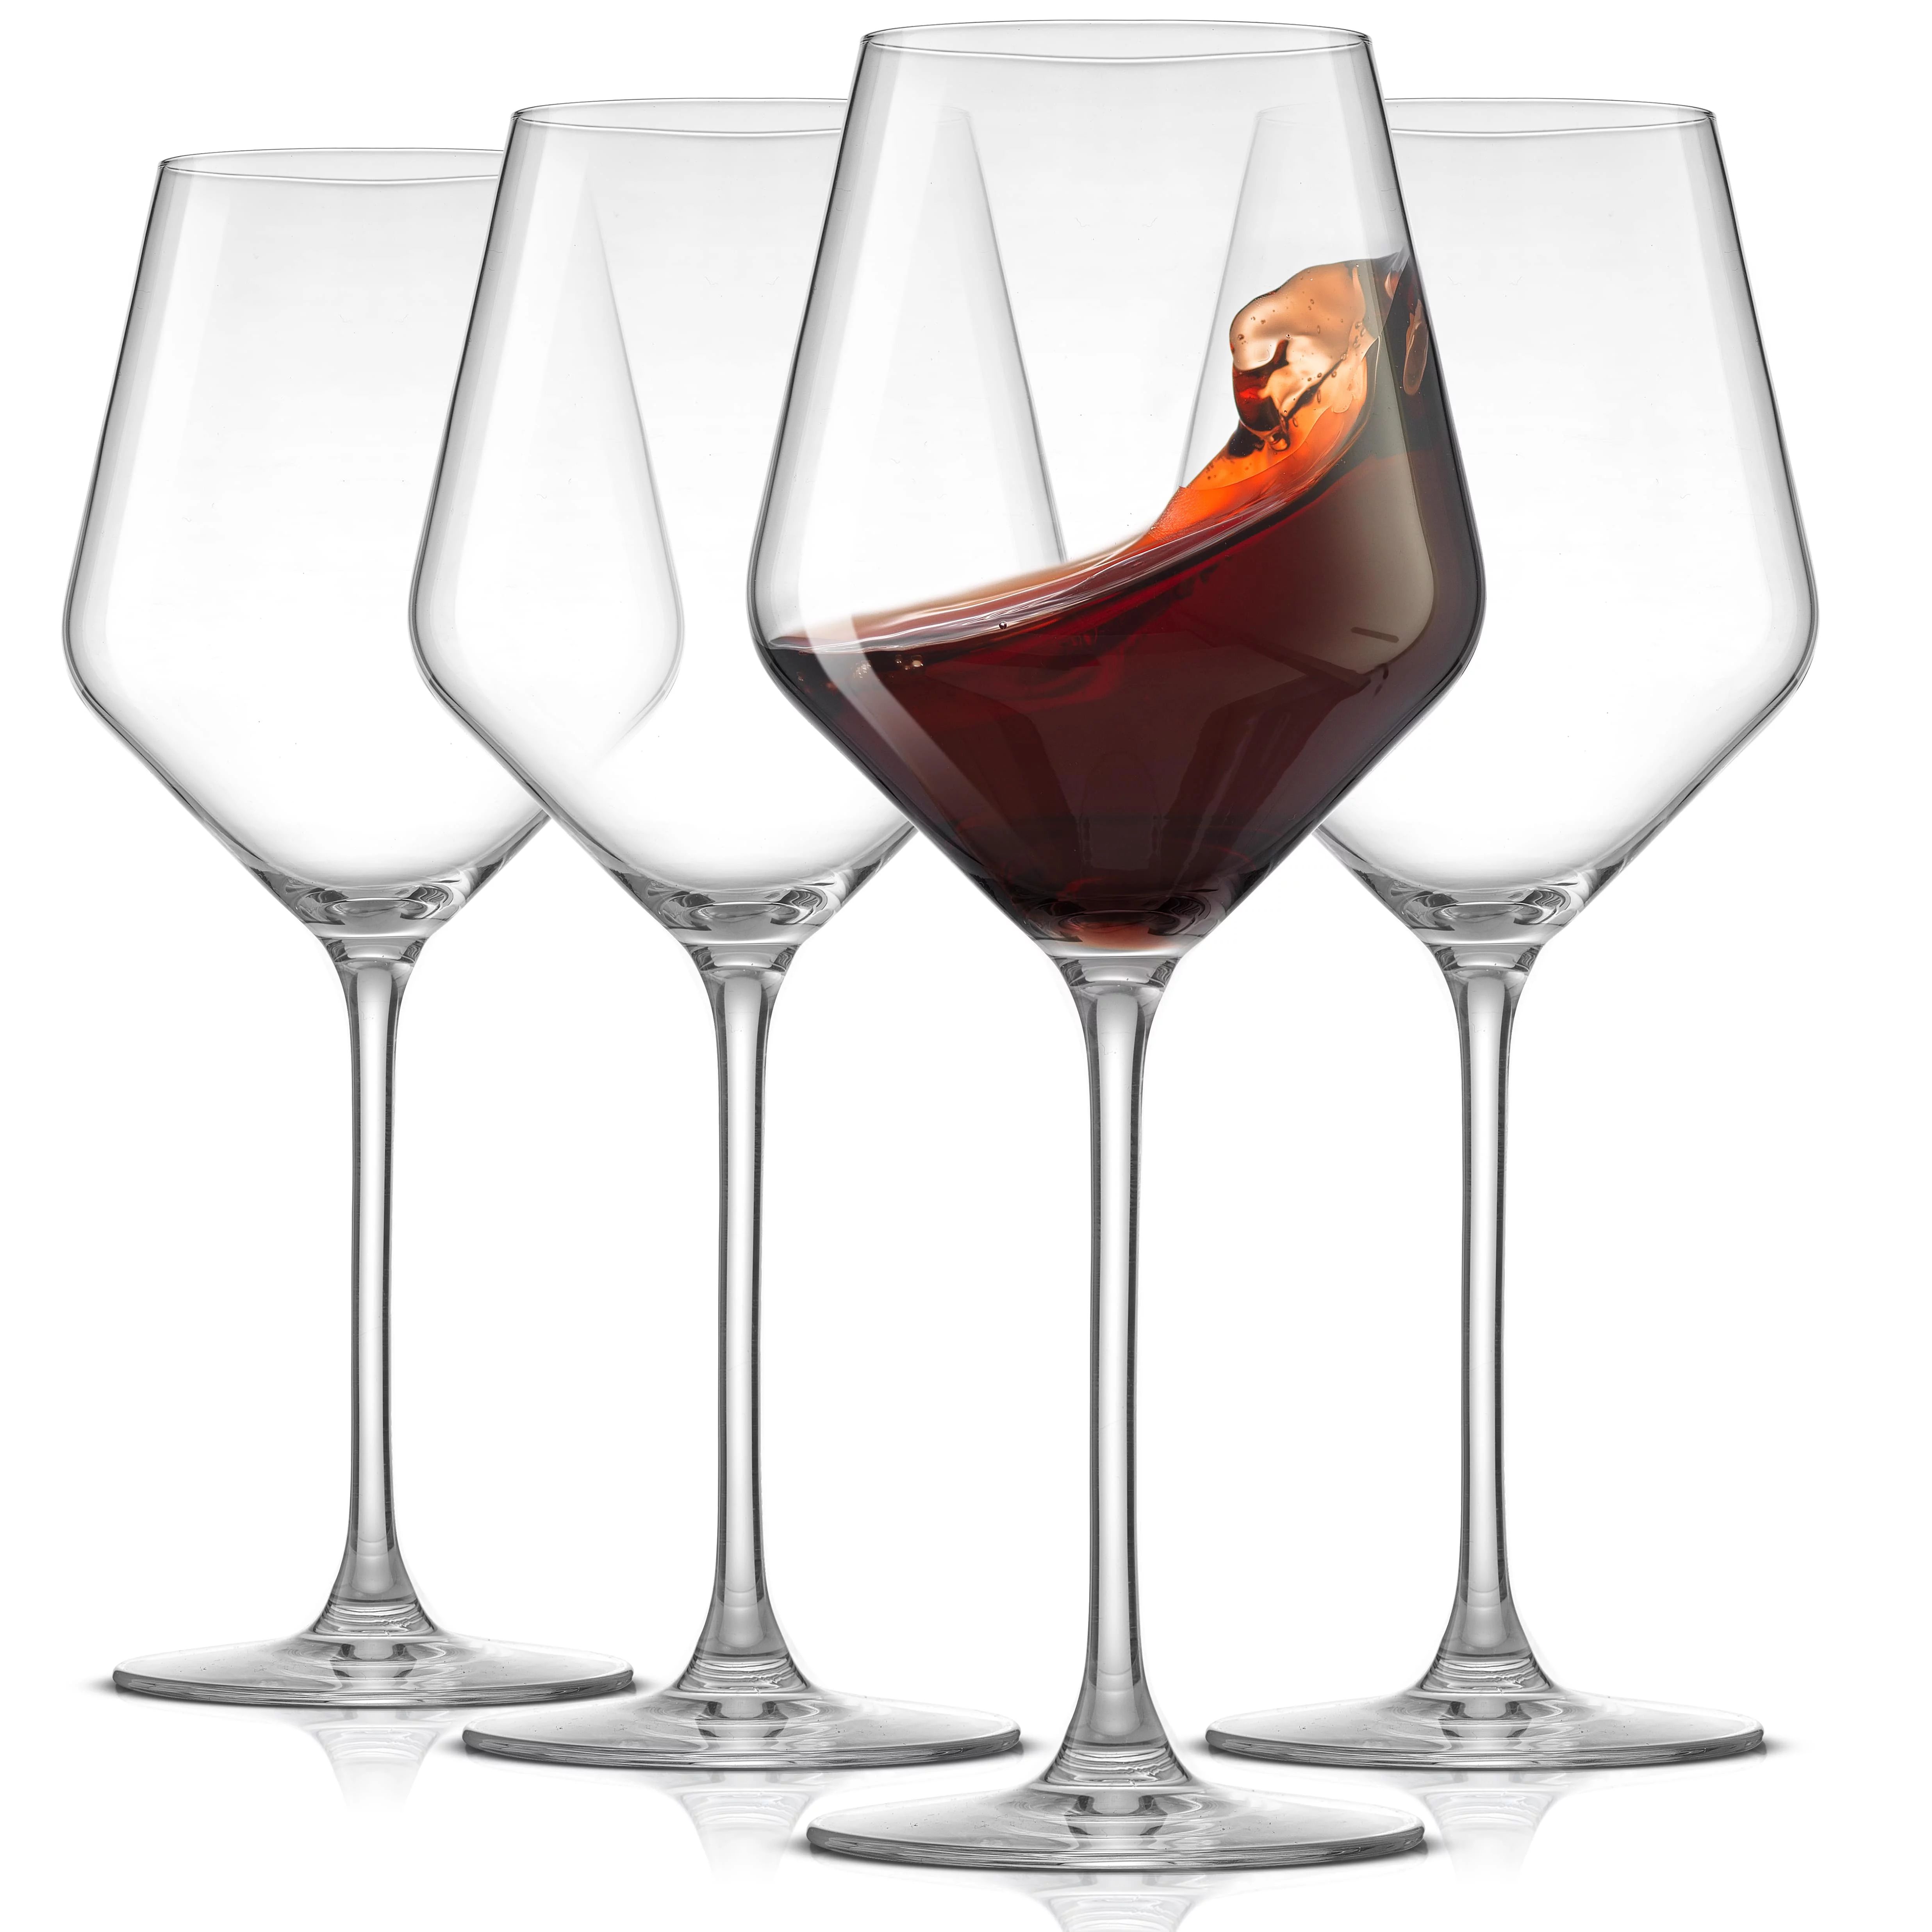 JoyJolt Layla European Crystal Red Wine Glasses, 17 Oz, Set of 4 Stemmed Wine Glasses | Walmart (US)